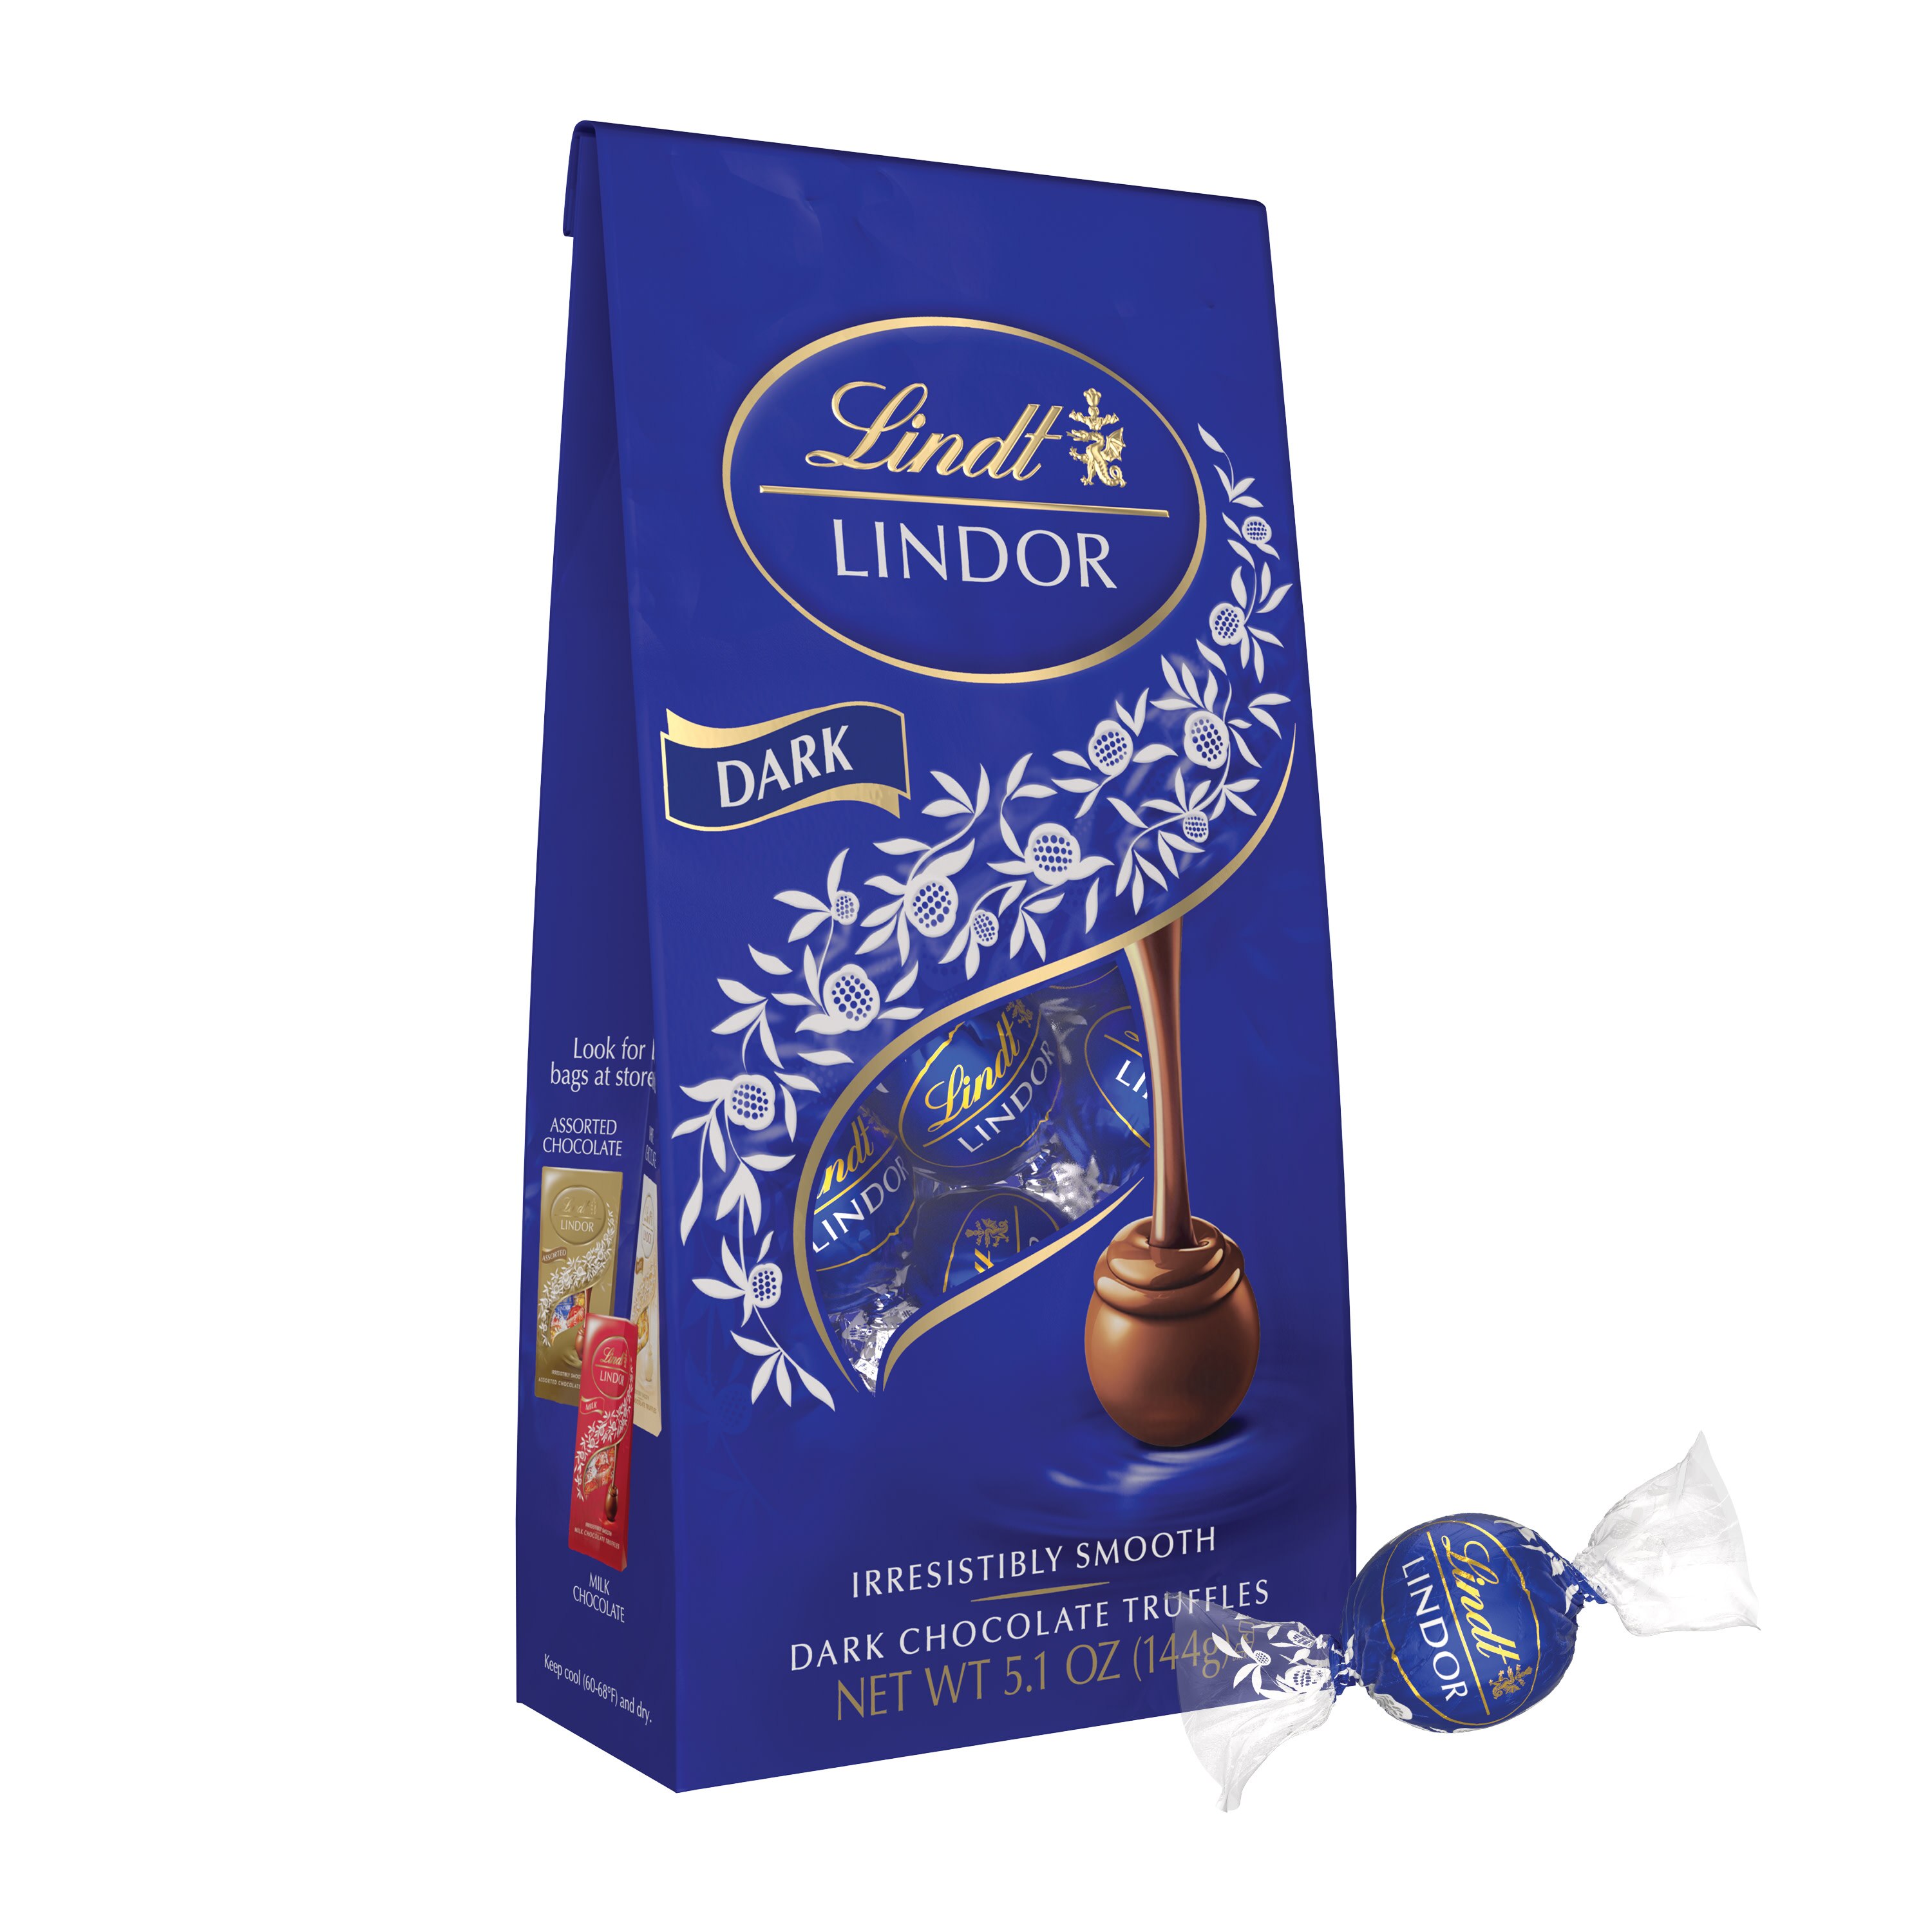 Lindt Lindor Dark Chocolate Candy Truffles, Chocolates with Smooth, Melting Truffle Center, 5.1 oz